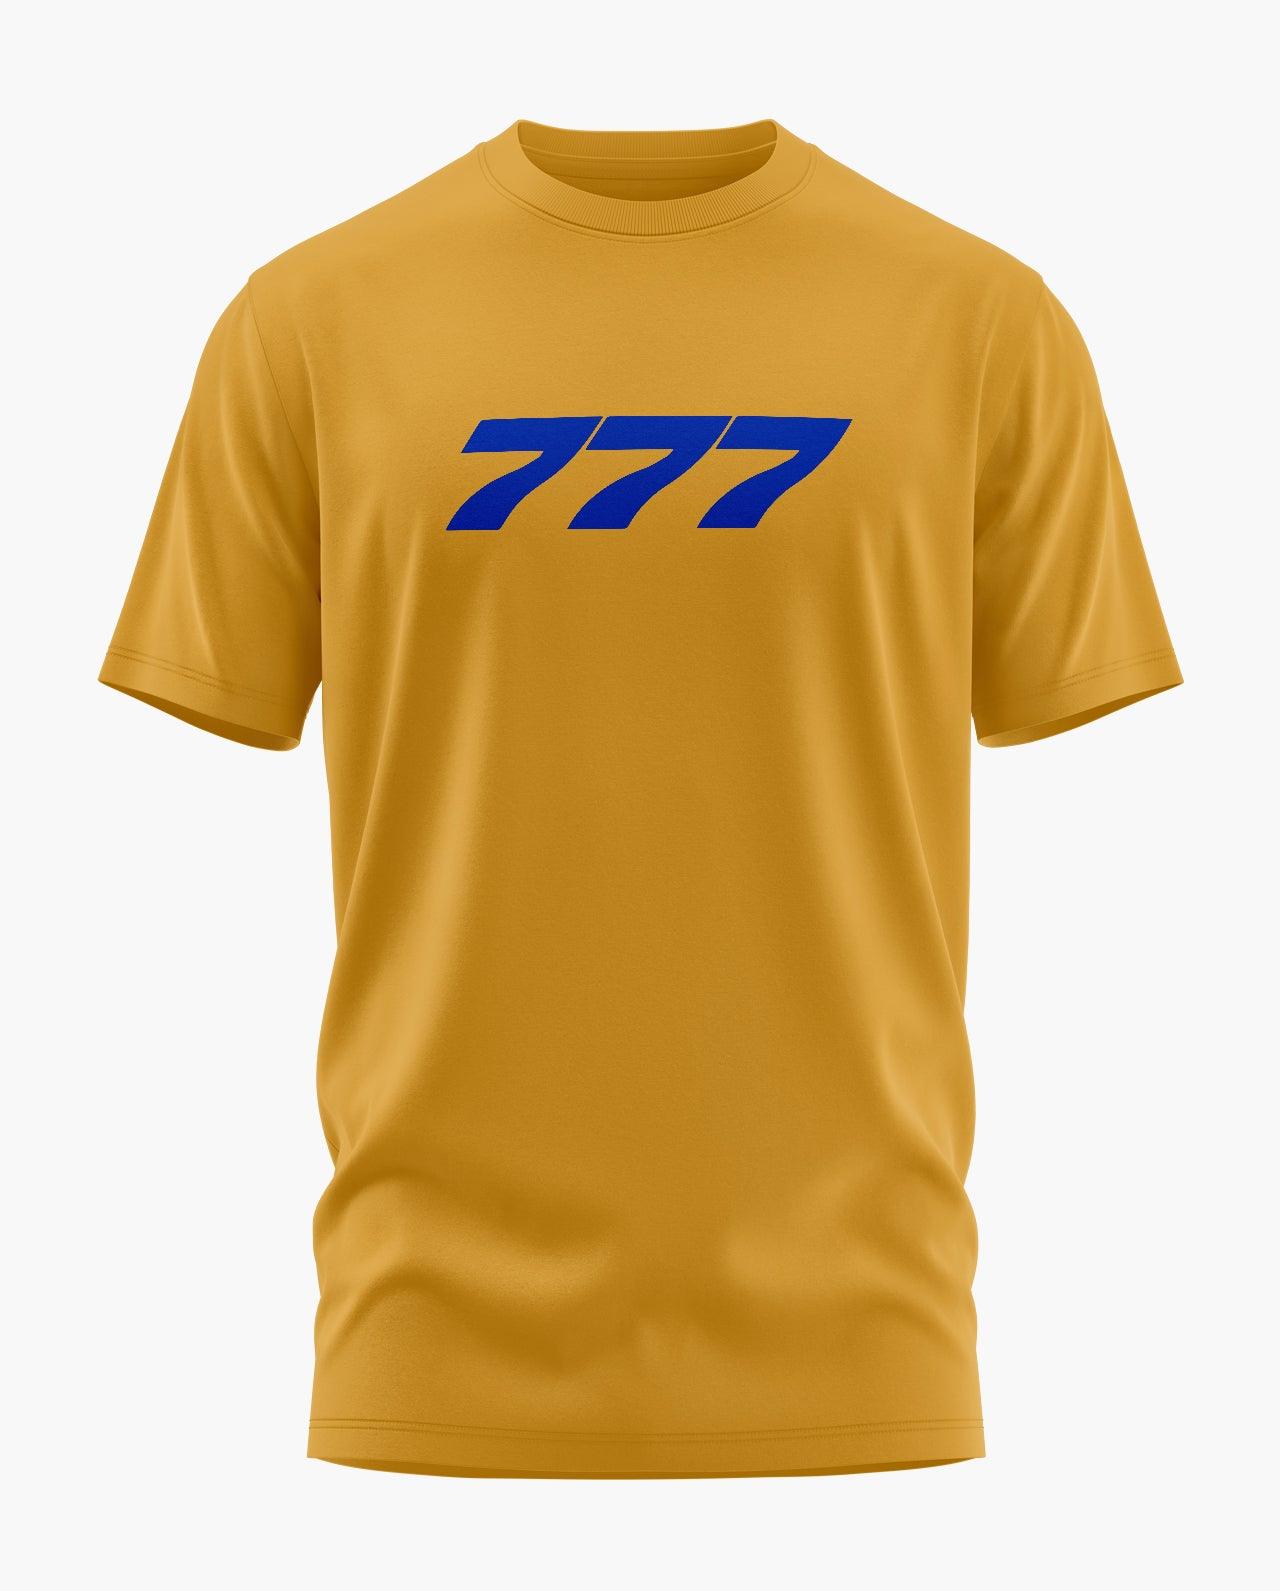 Boeing 777 Pilot T-Shirt - Aero Armour